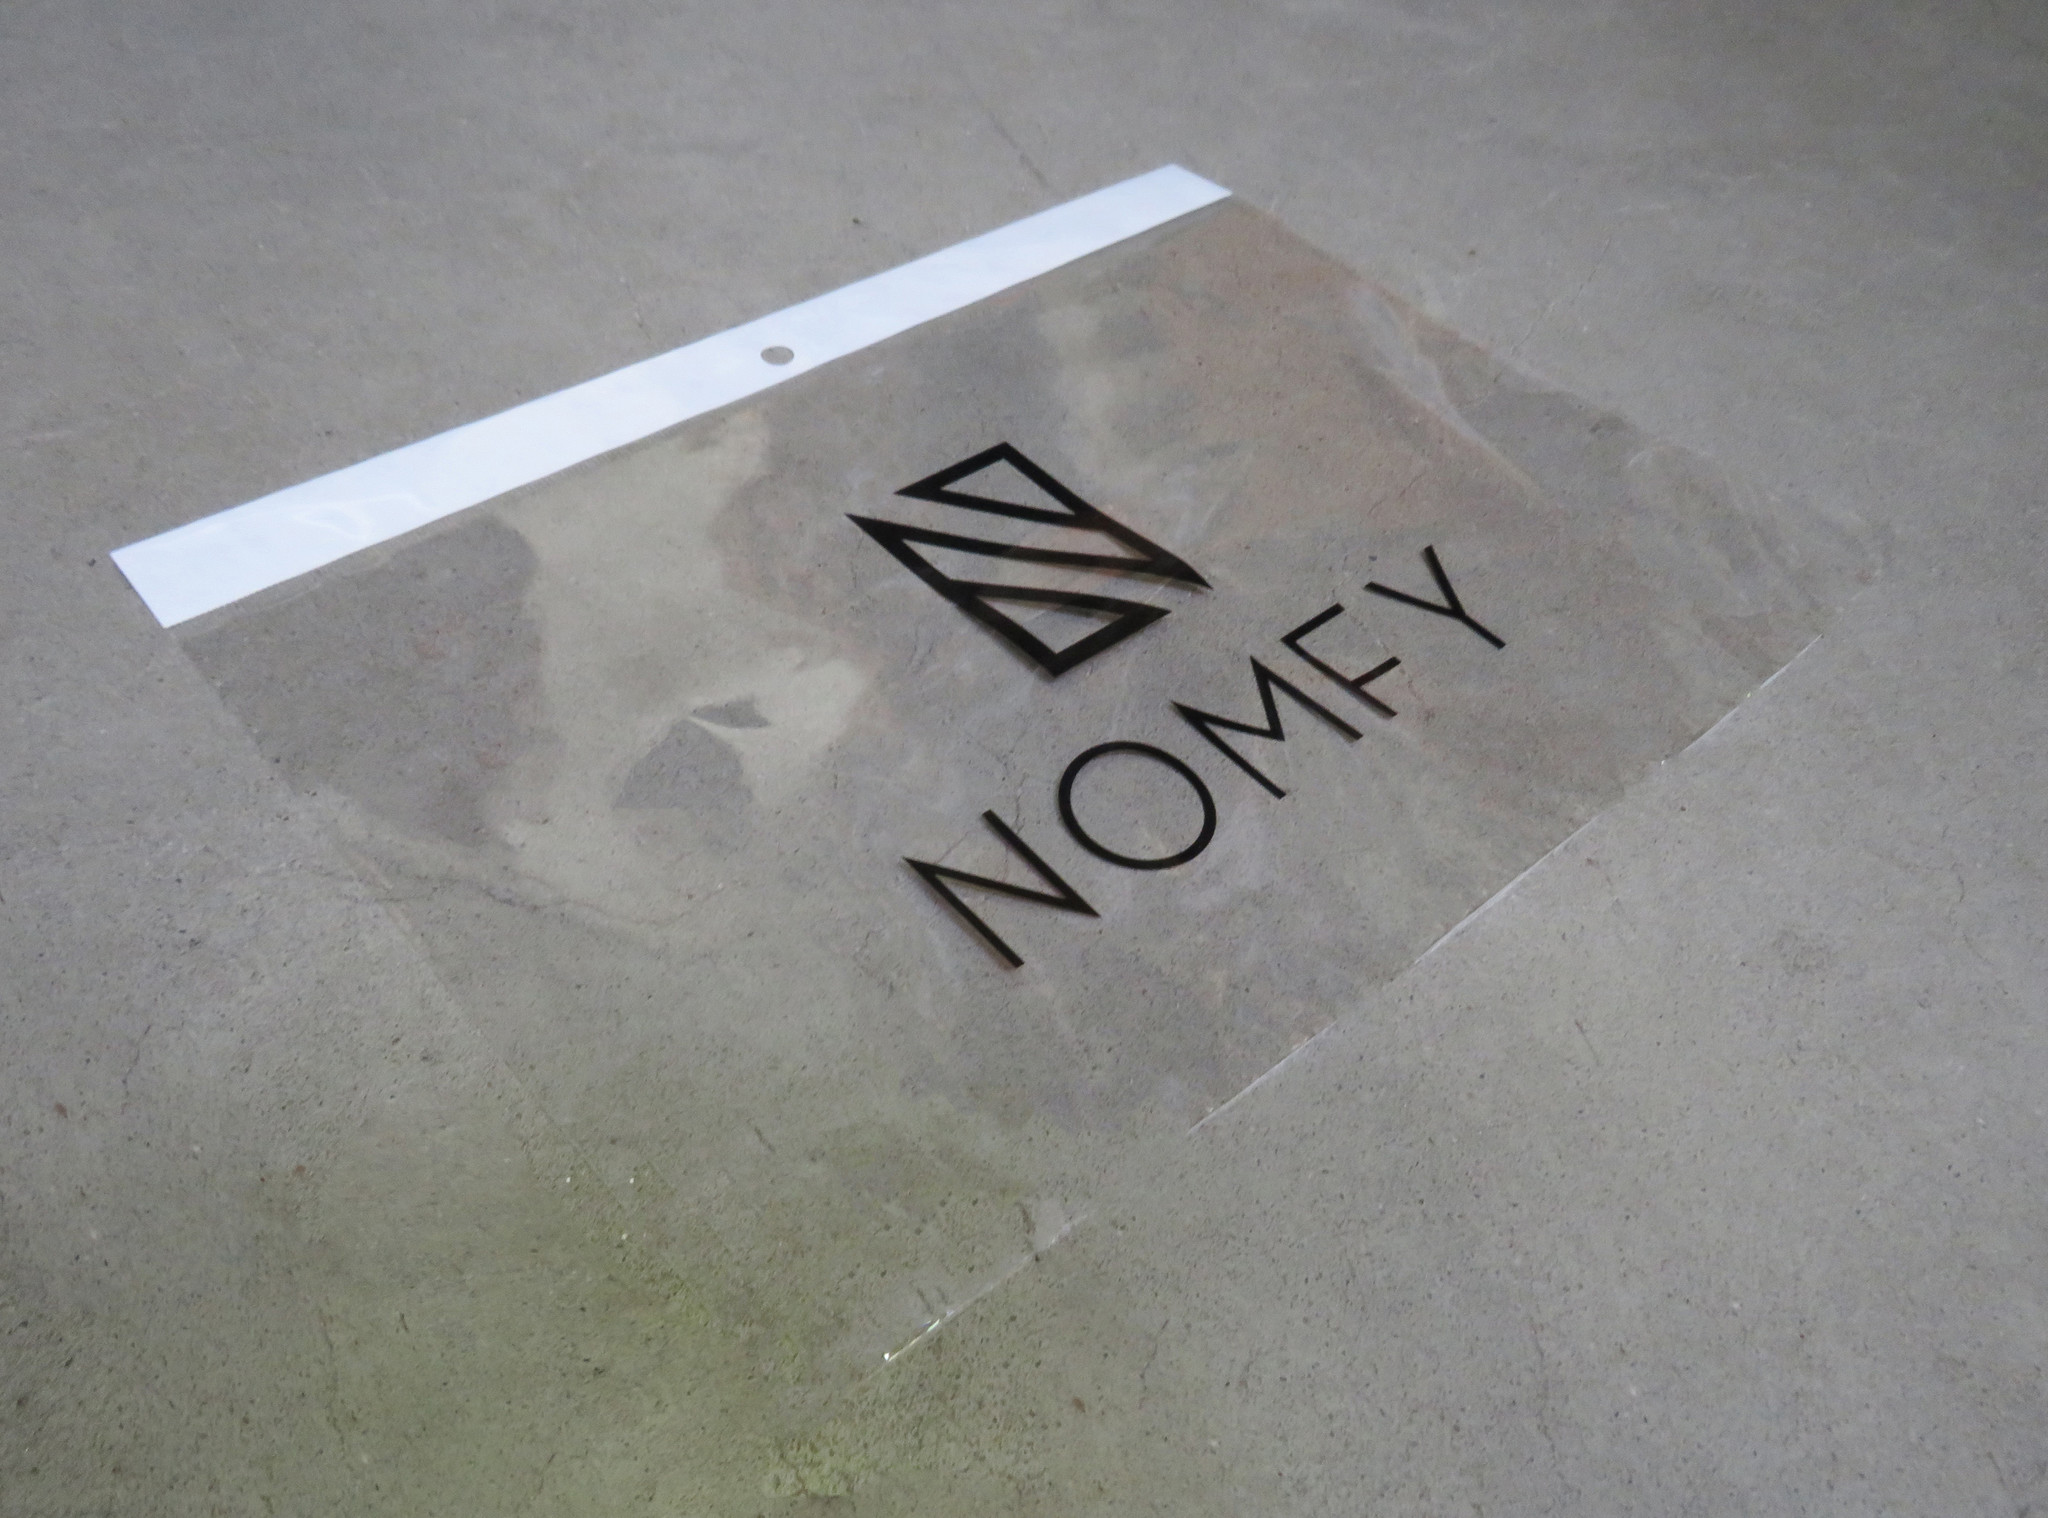 Nomfy Nomfy iPad Pro 11 inch (2022) Kinderhoes - Groen